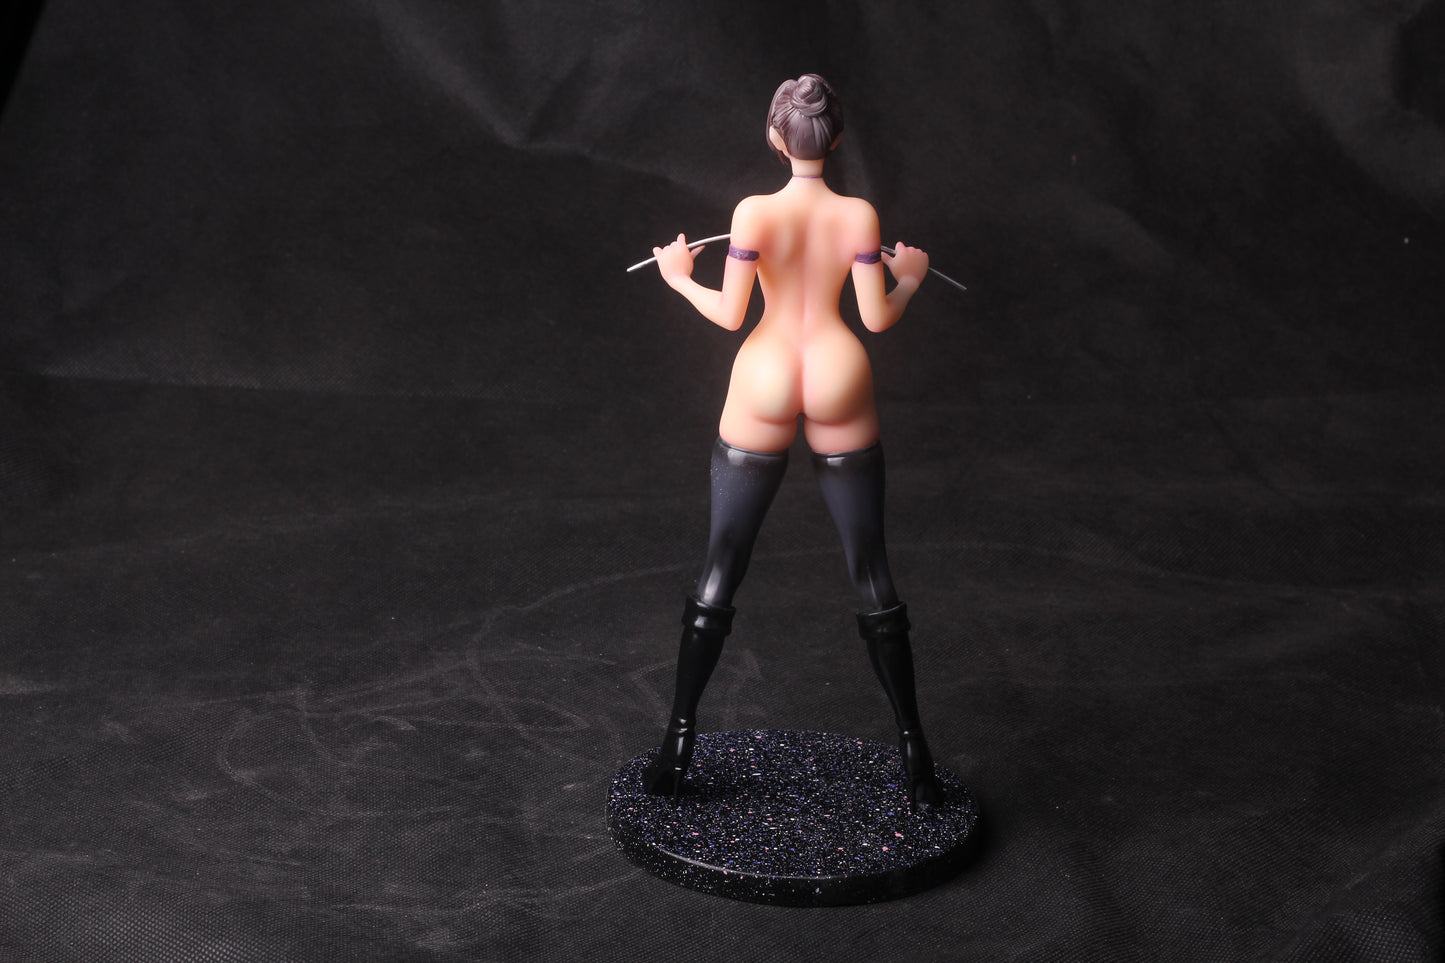 Prison School Shiraki Meiko 1/6 nude anime figure resin model figures